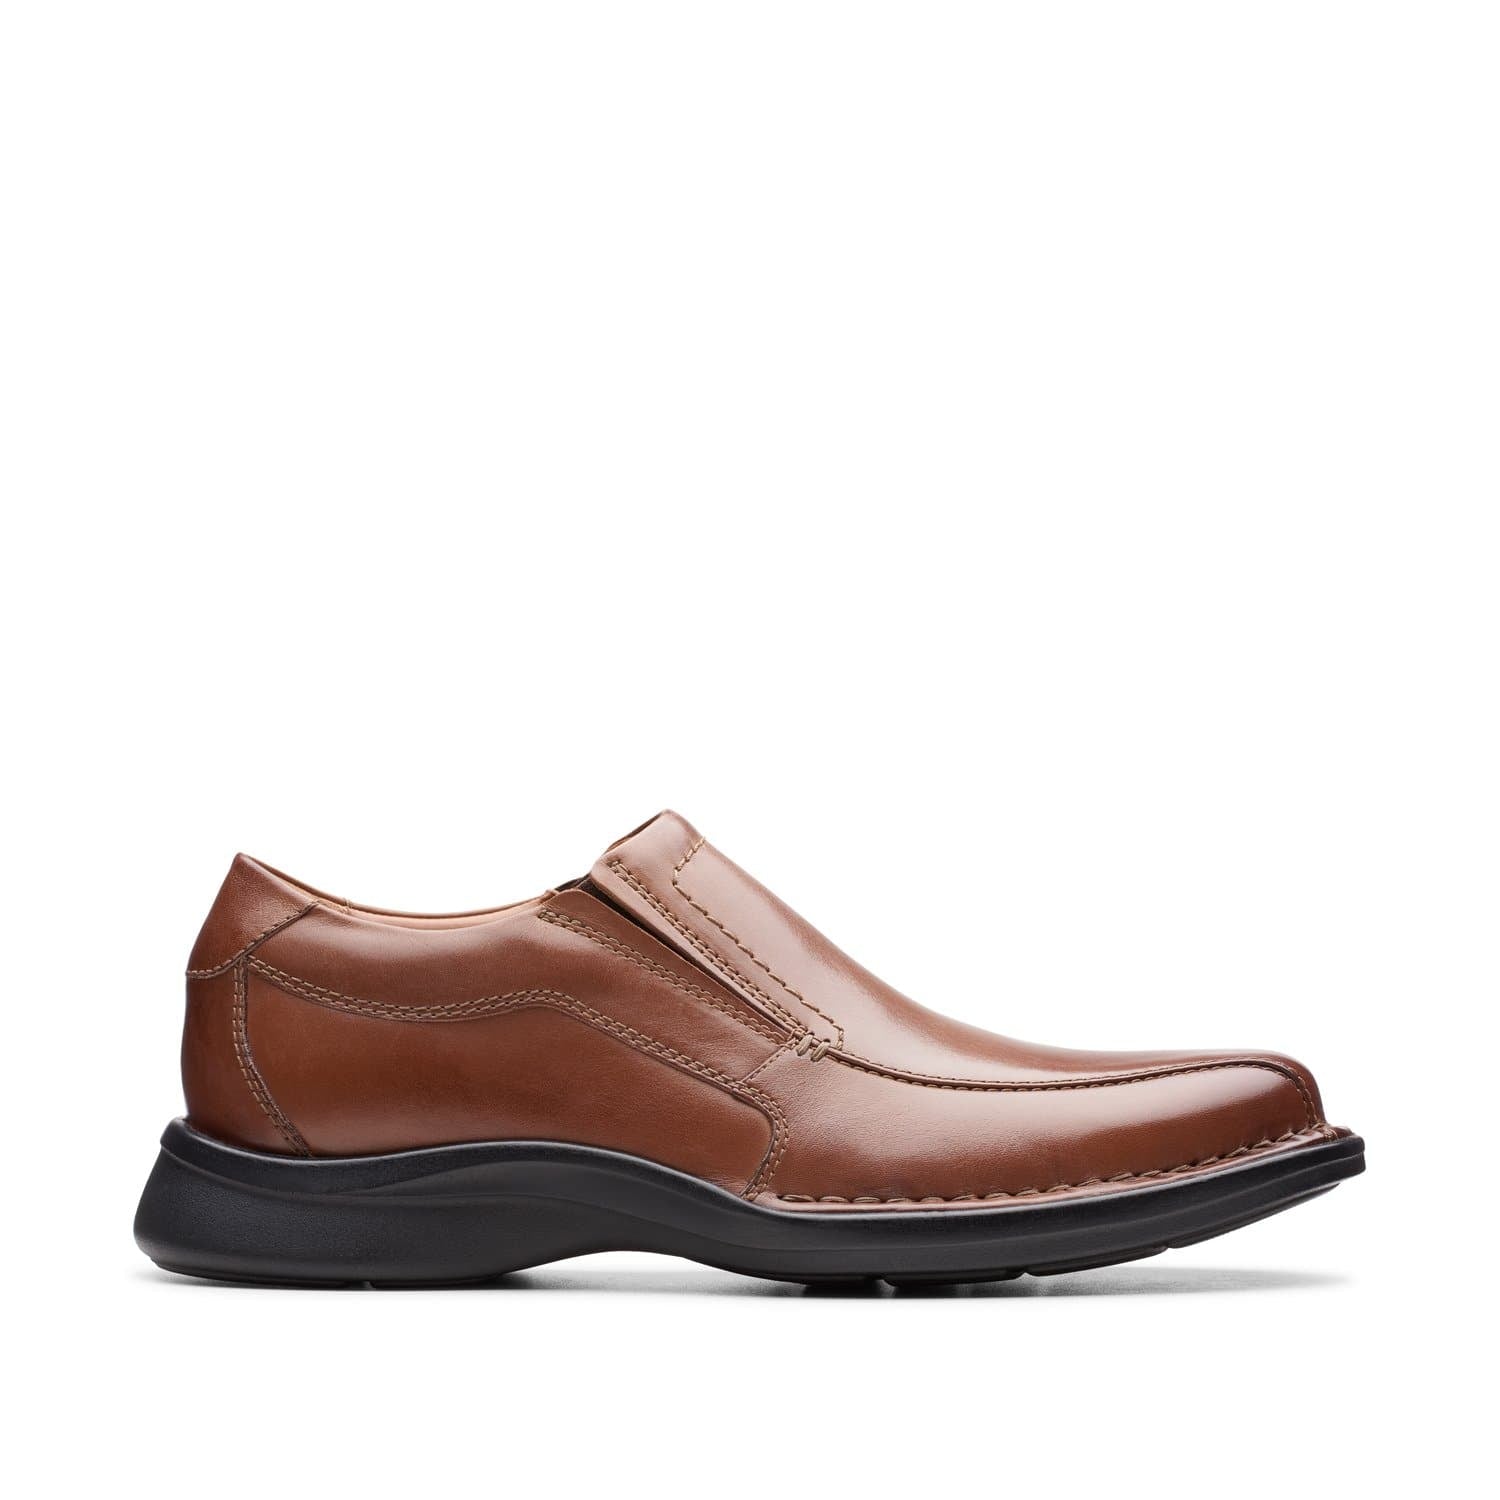 Clarks-Kempton-Step-Men's-Shoes-Tan-Leather-26145453